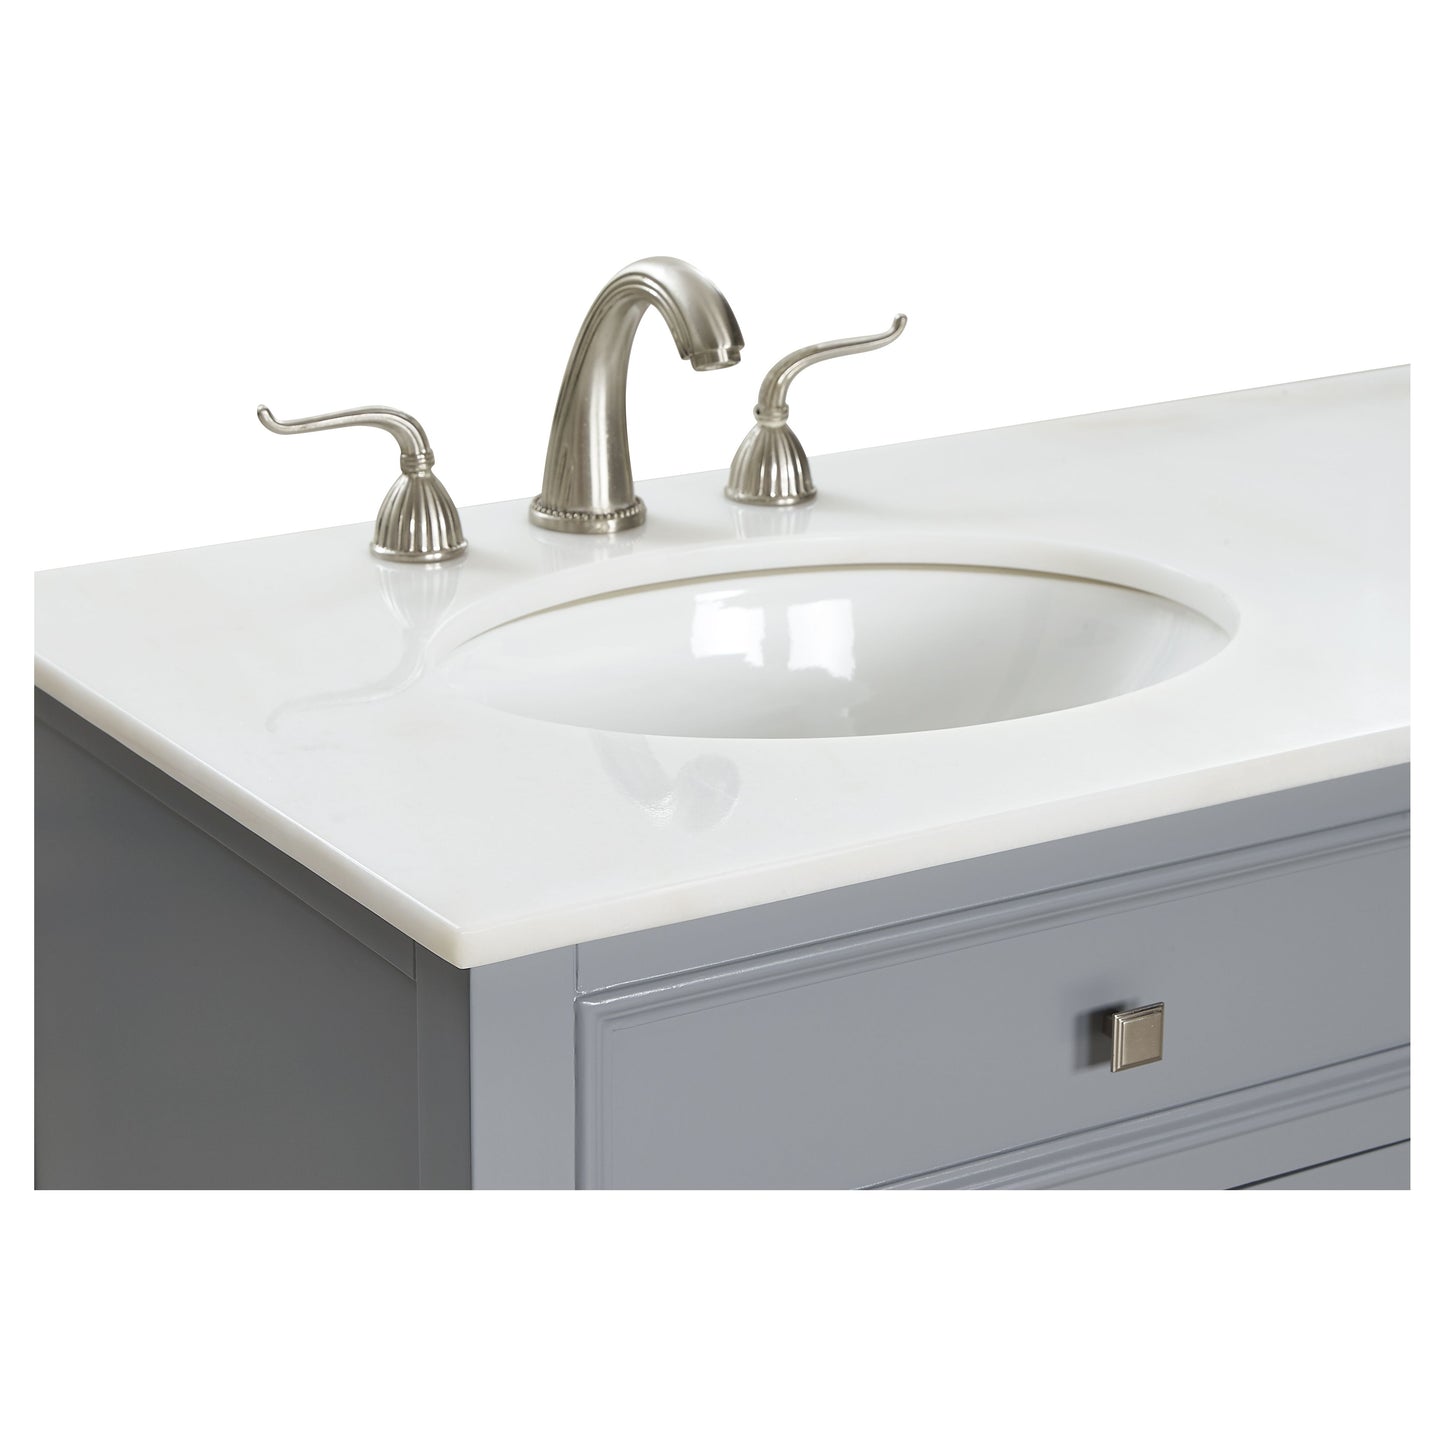 VF10460GR 60" Double Bathroom Vanity in Grey